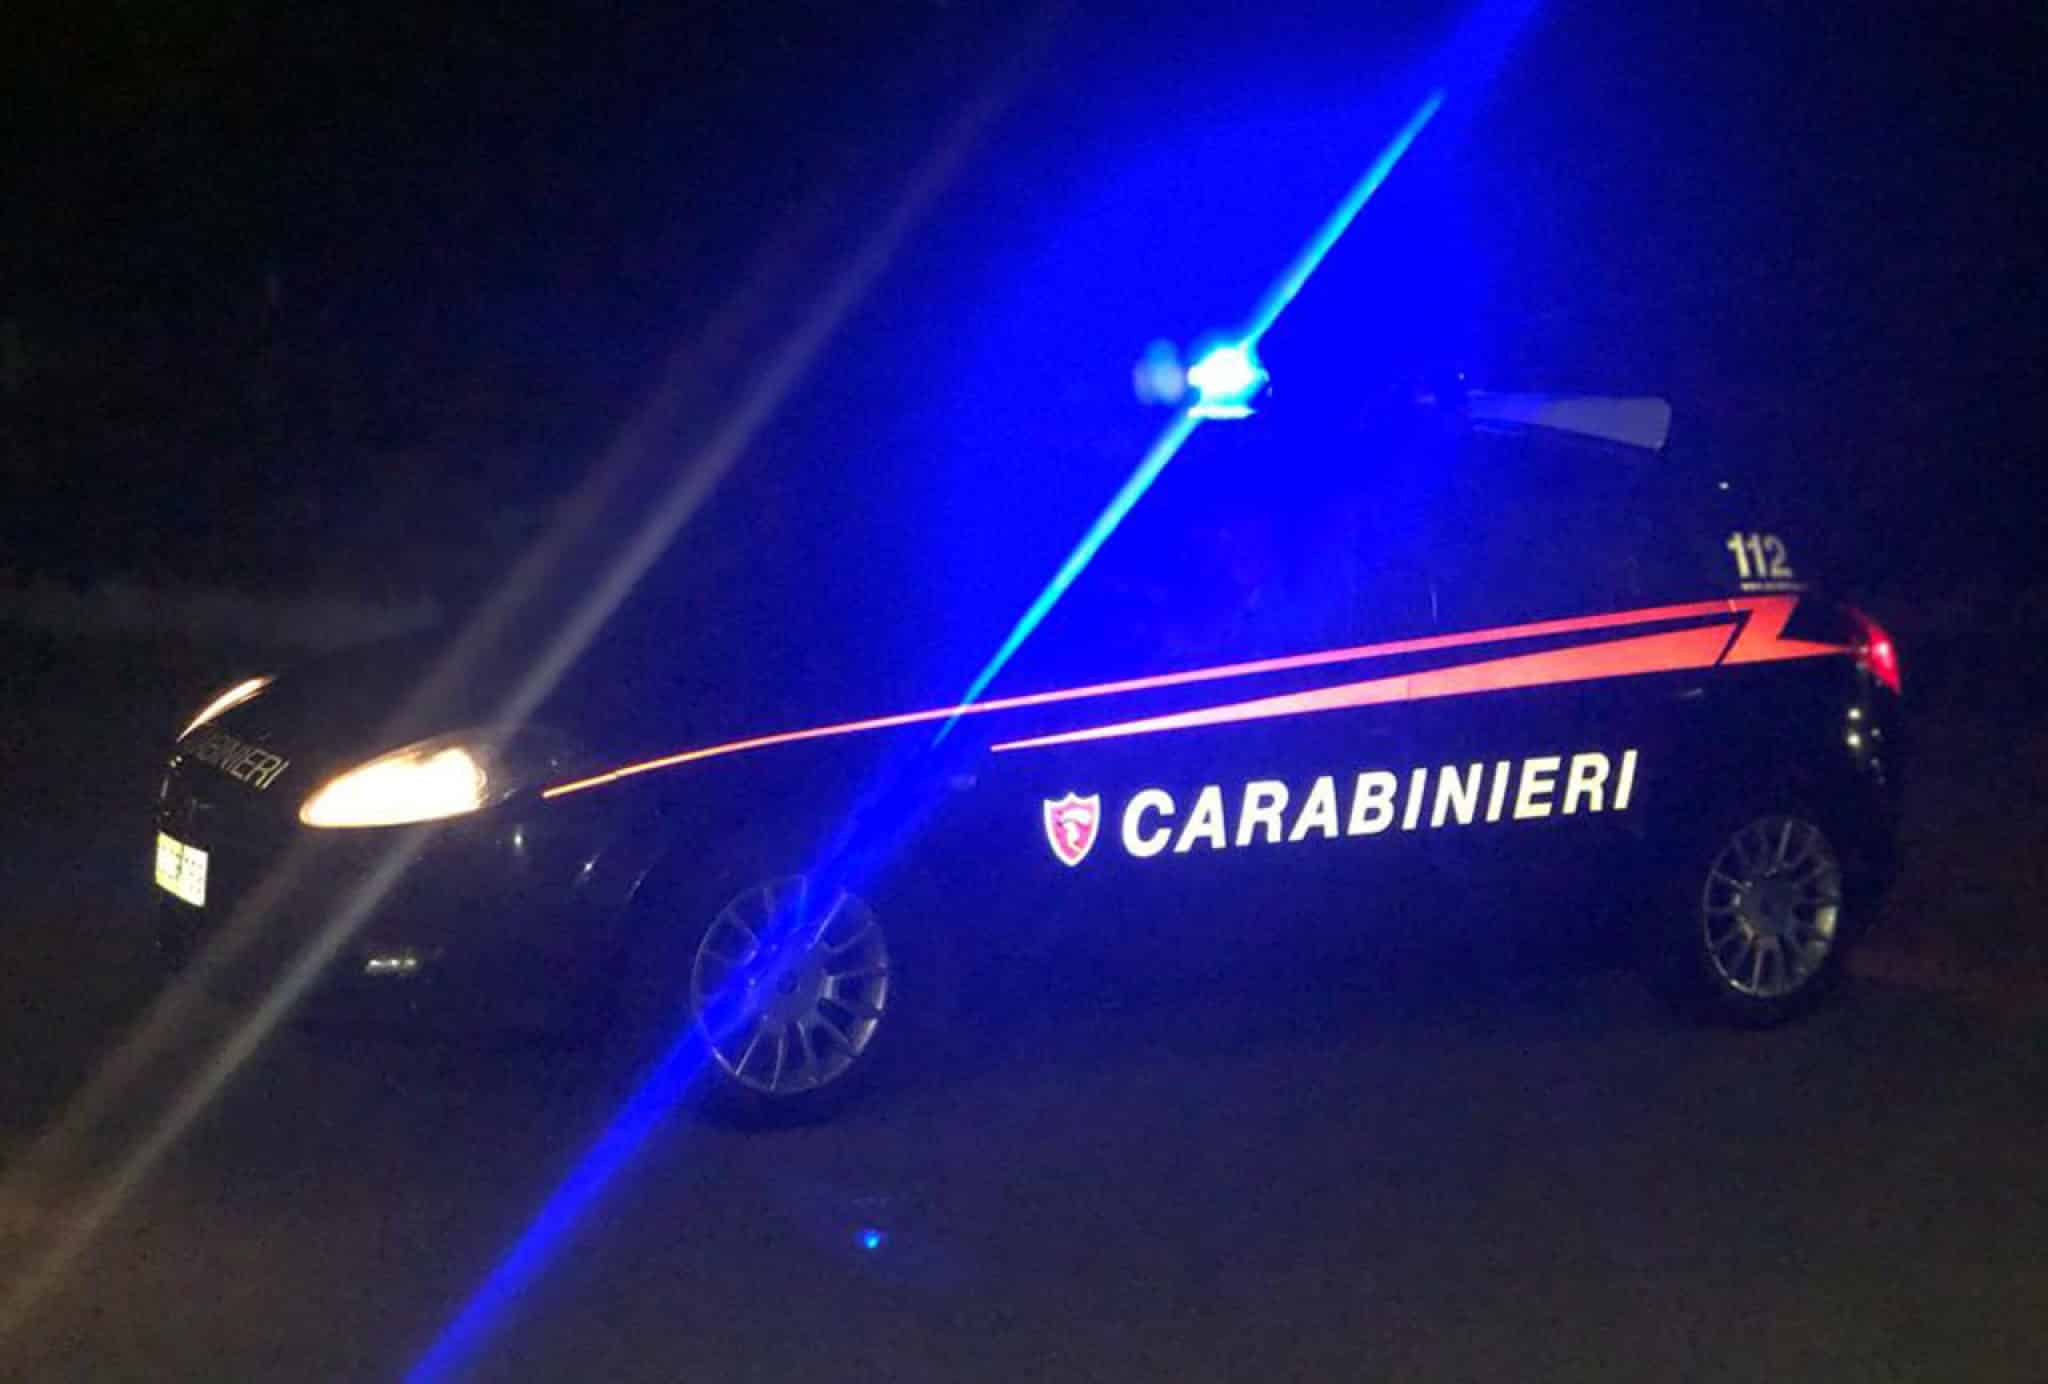 carabinieri scaled.jpg